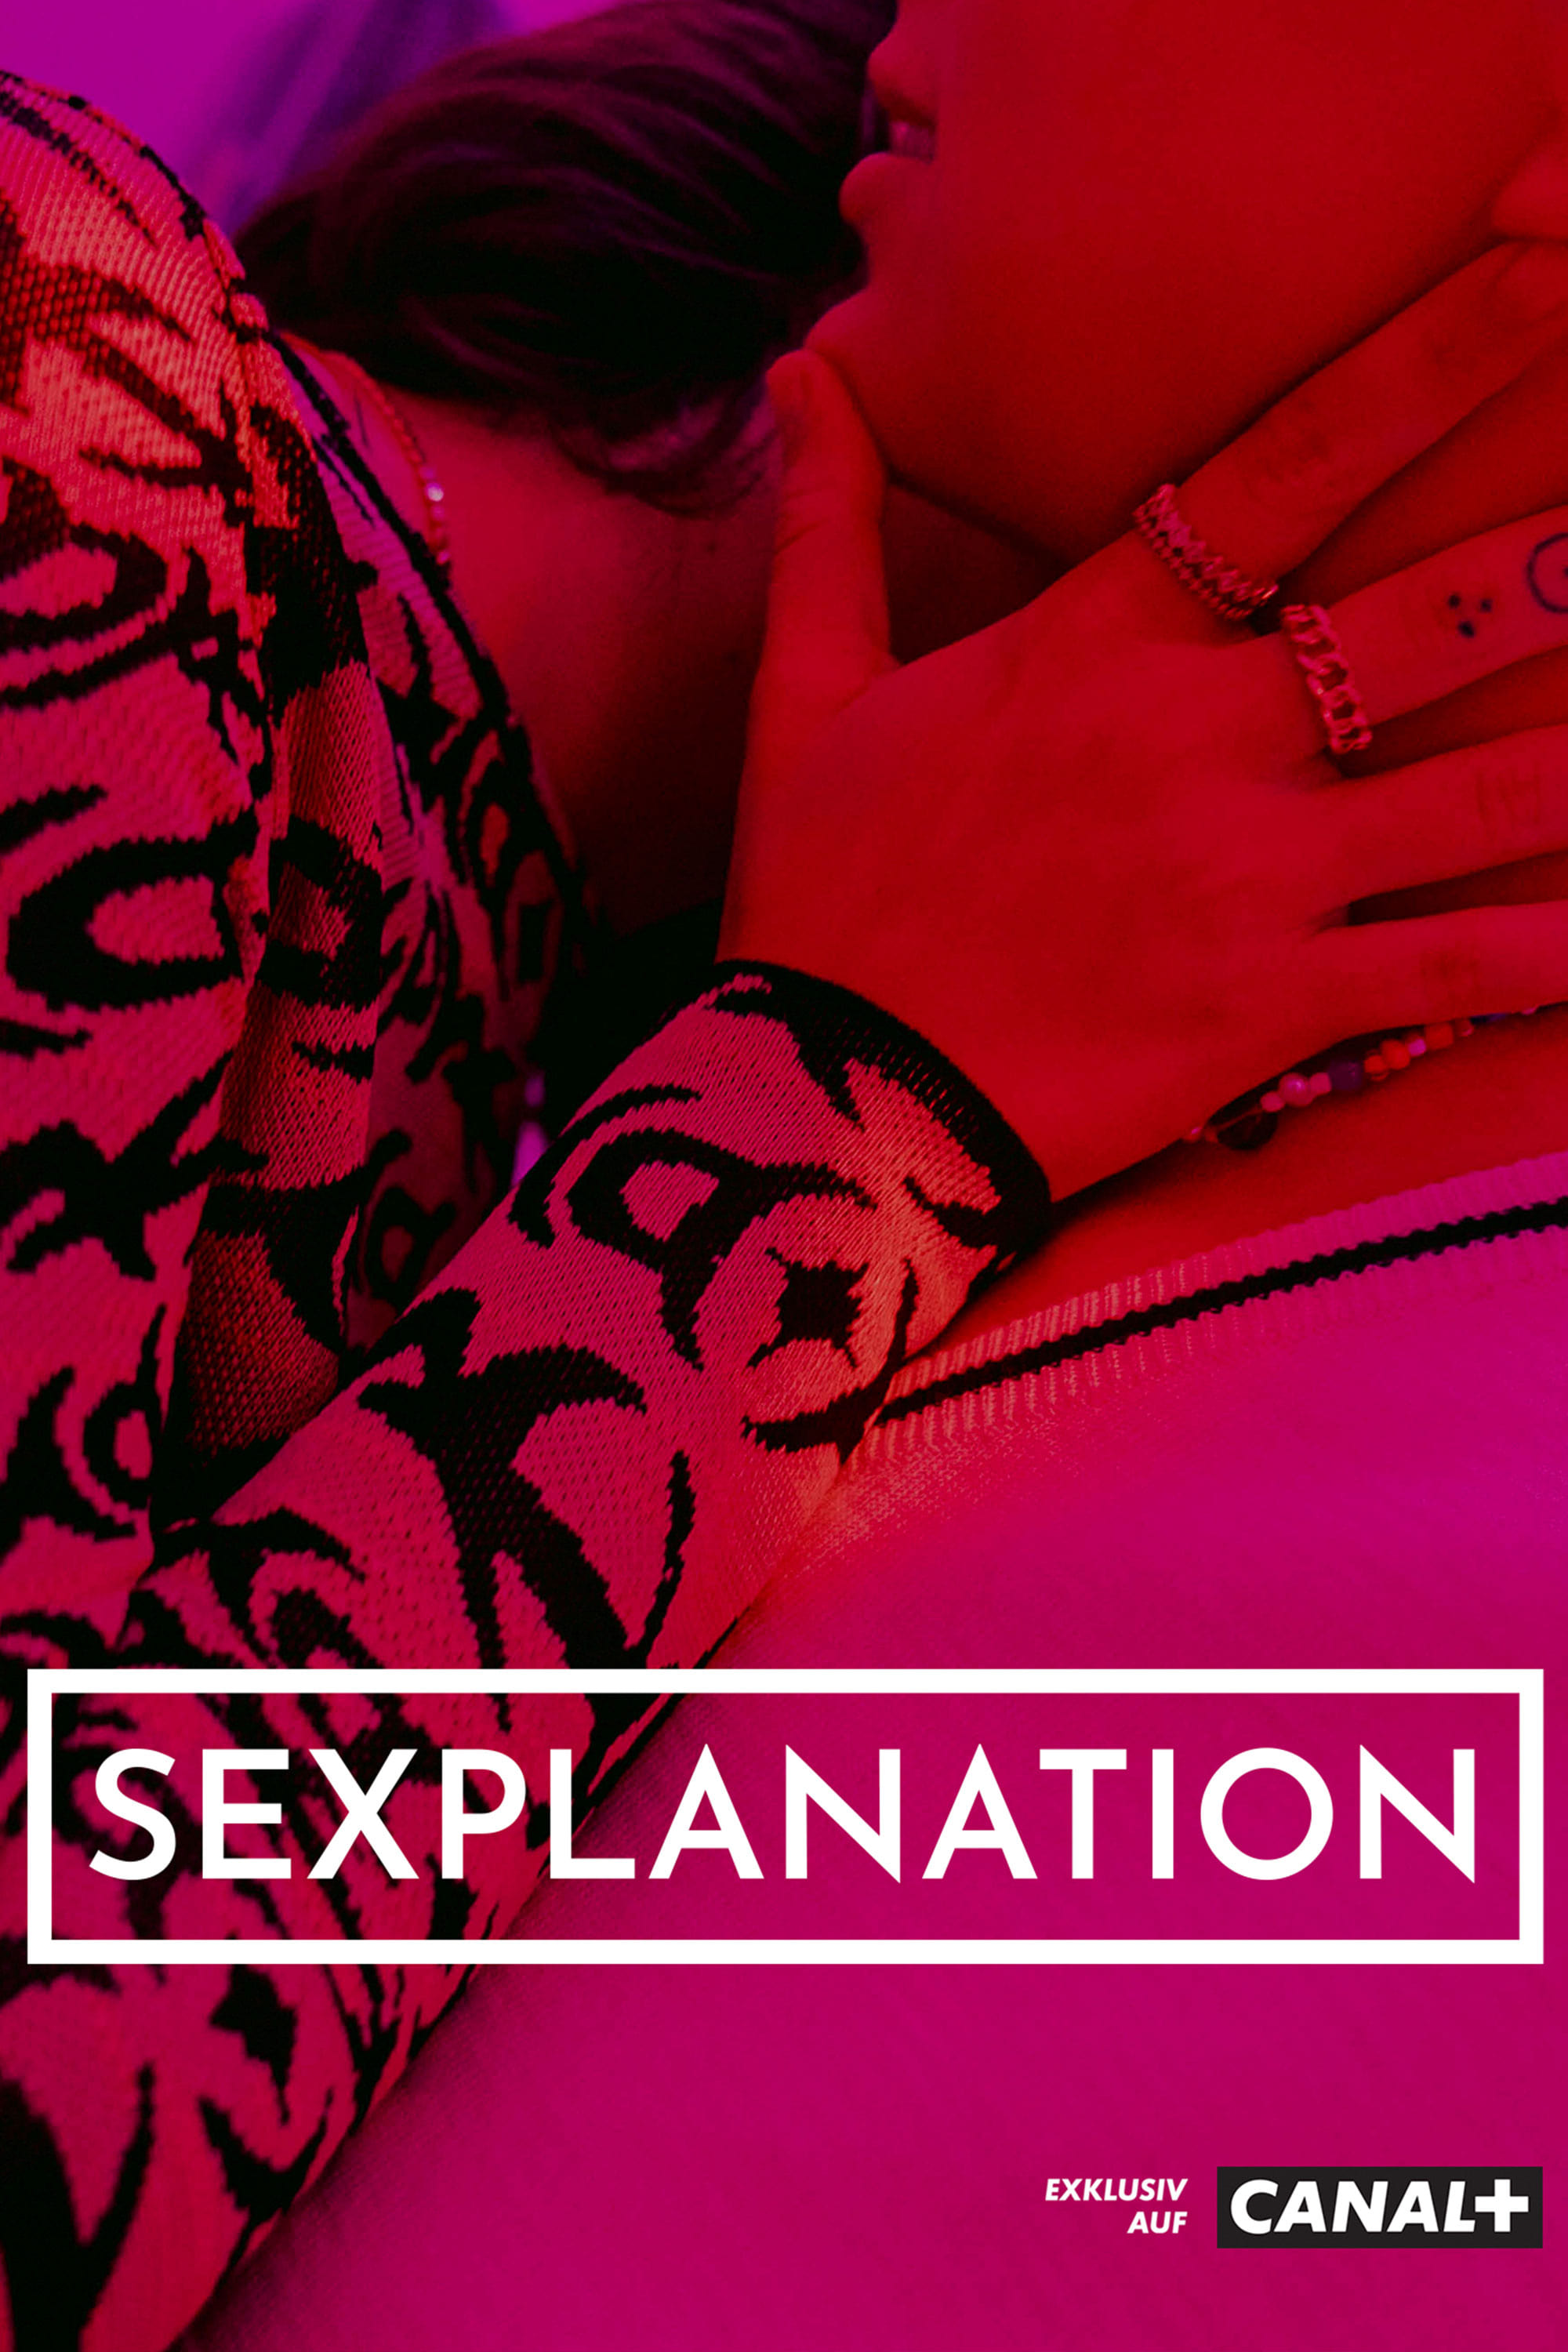 Sexplanation